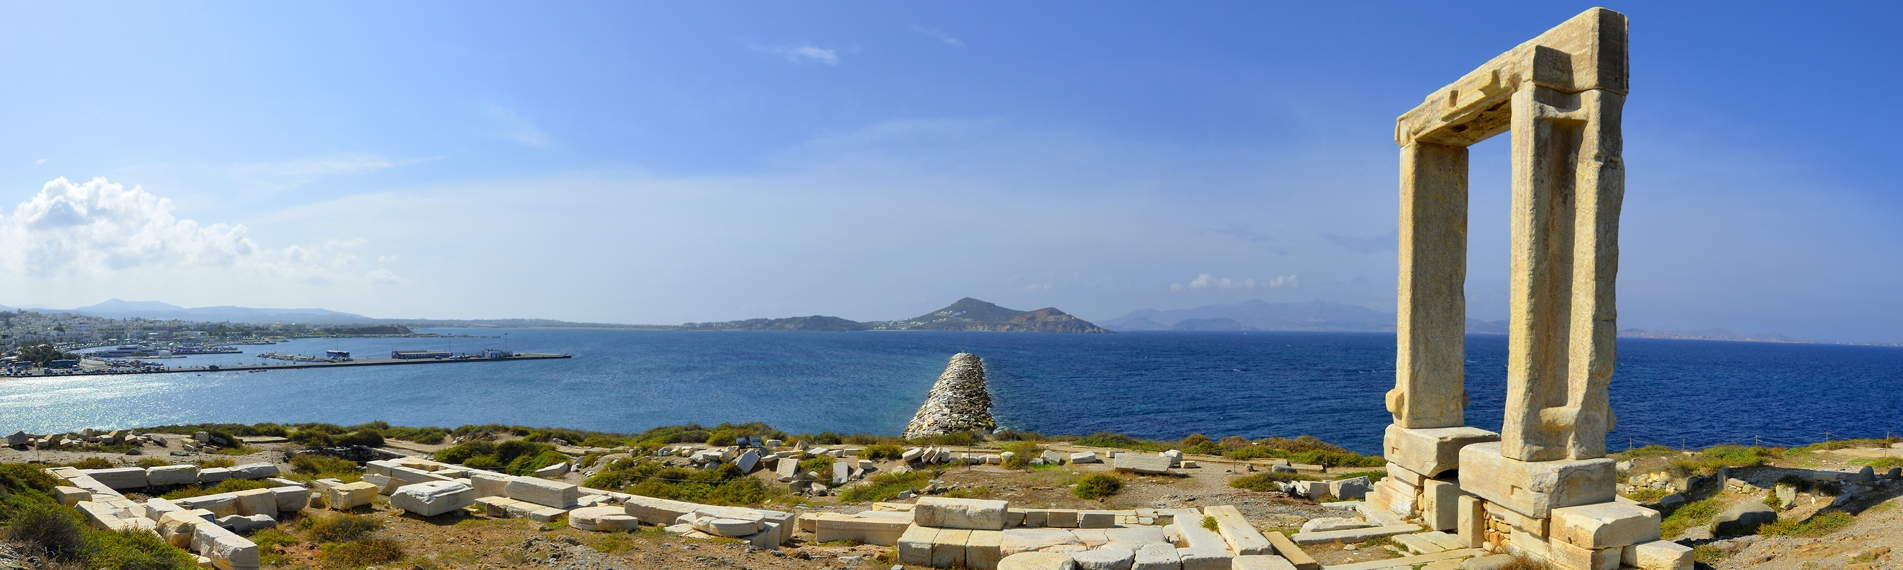 Panorama de Portara, Naxos, Grecia